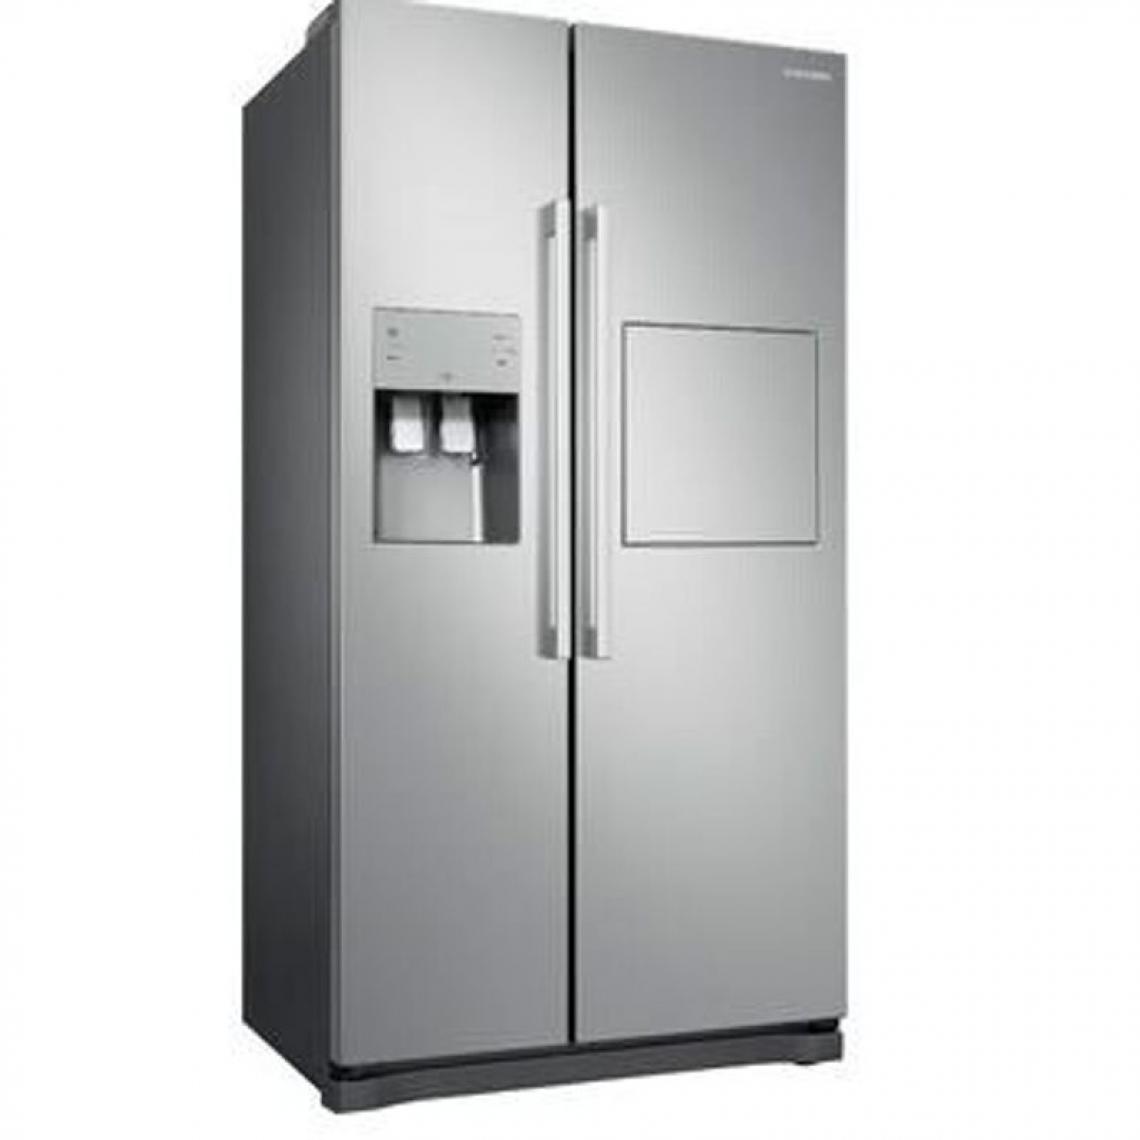 Samsung - Réfrigérateur américain SAMSUNG RS50N3903SA 535L silver - Réfrigérateur américain